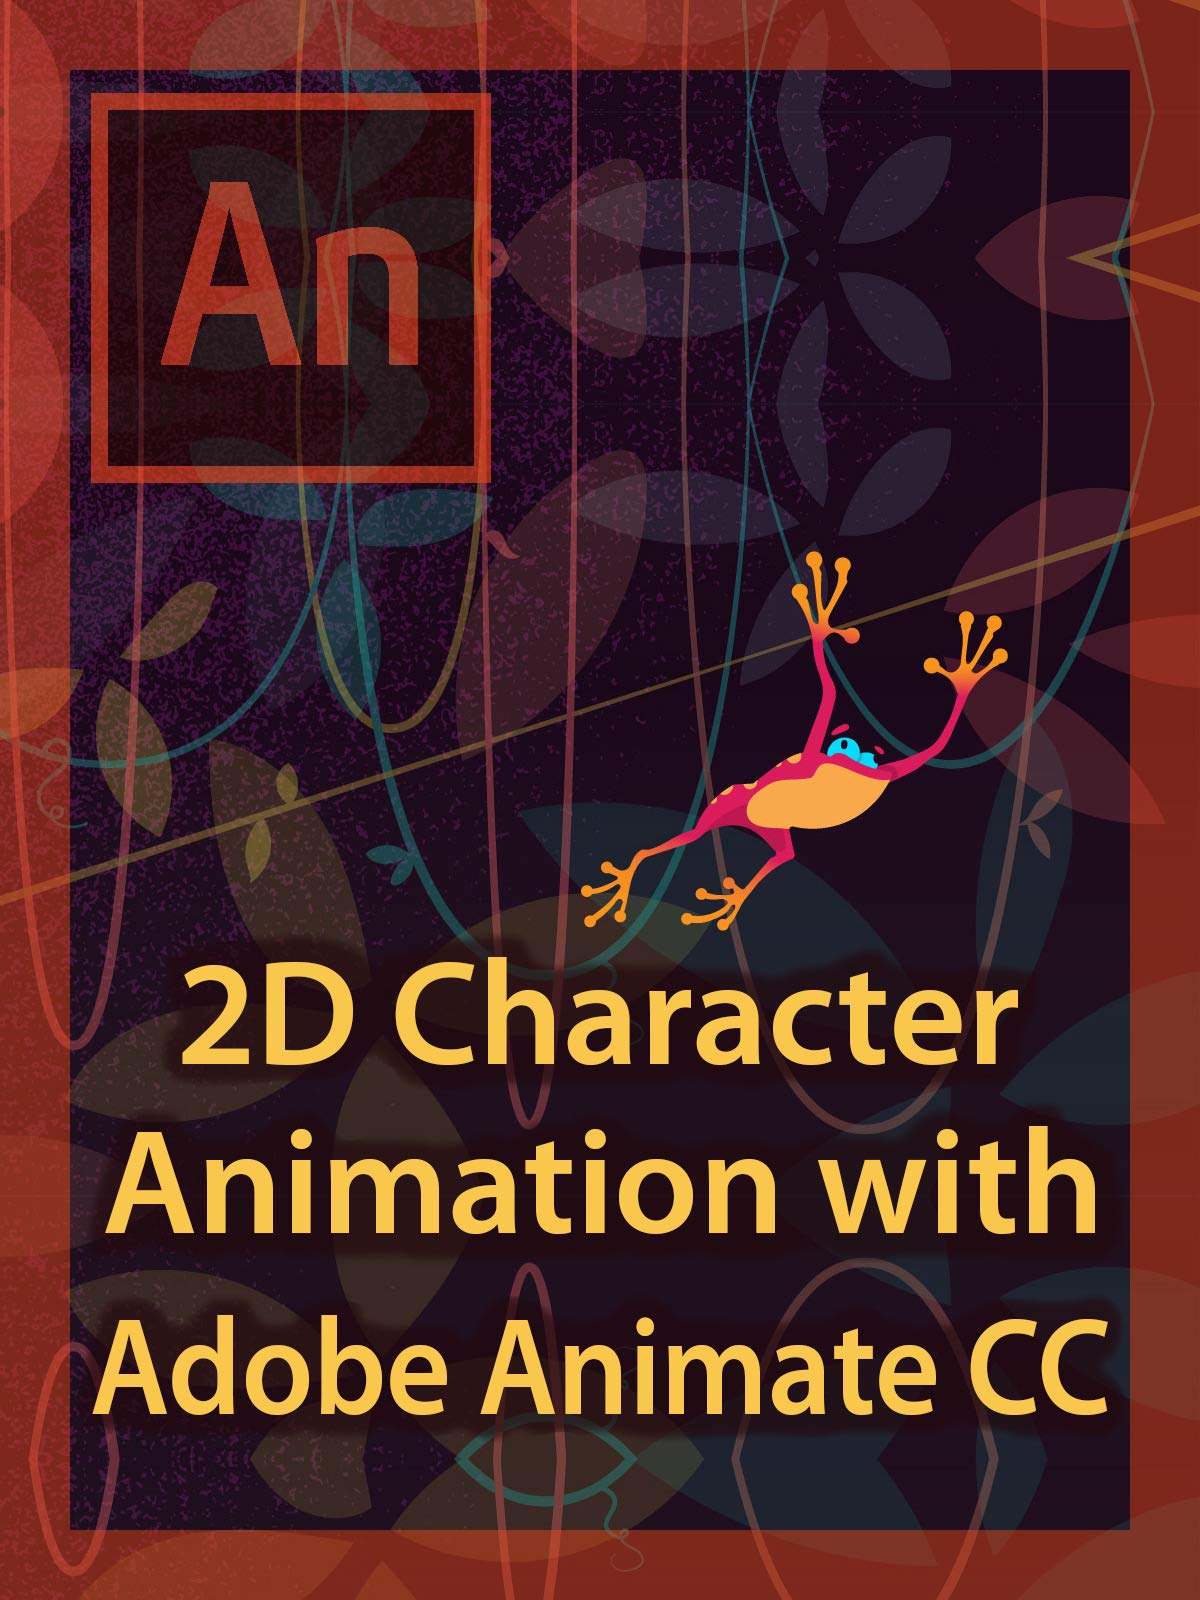 Adobe Animate Training Course